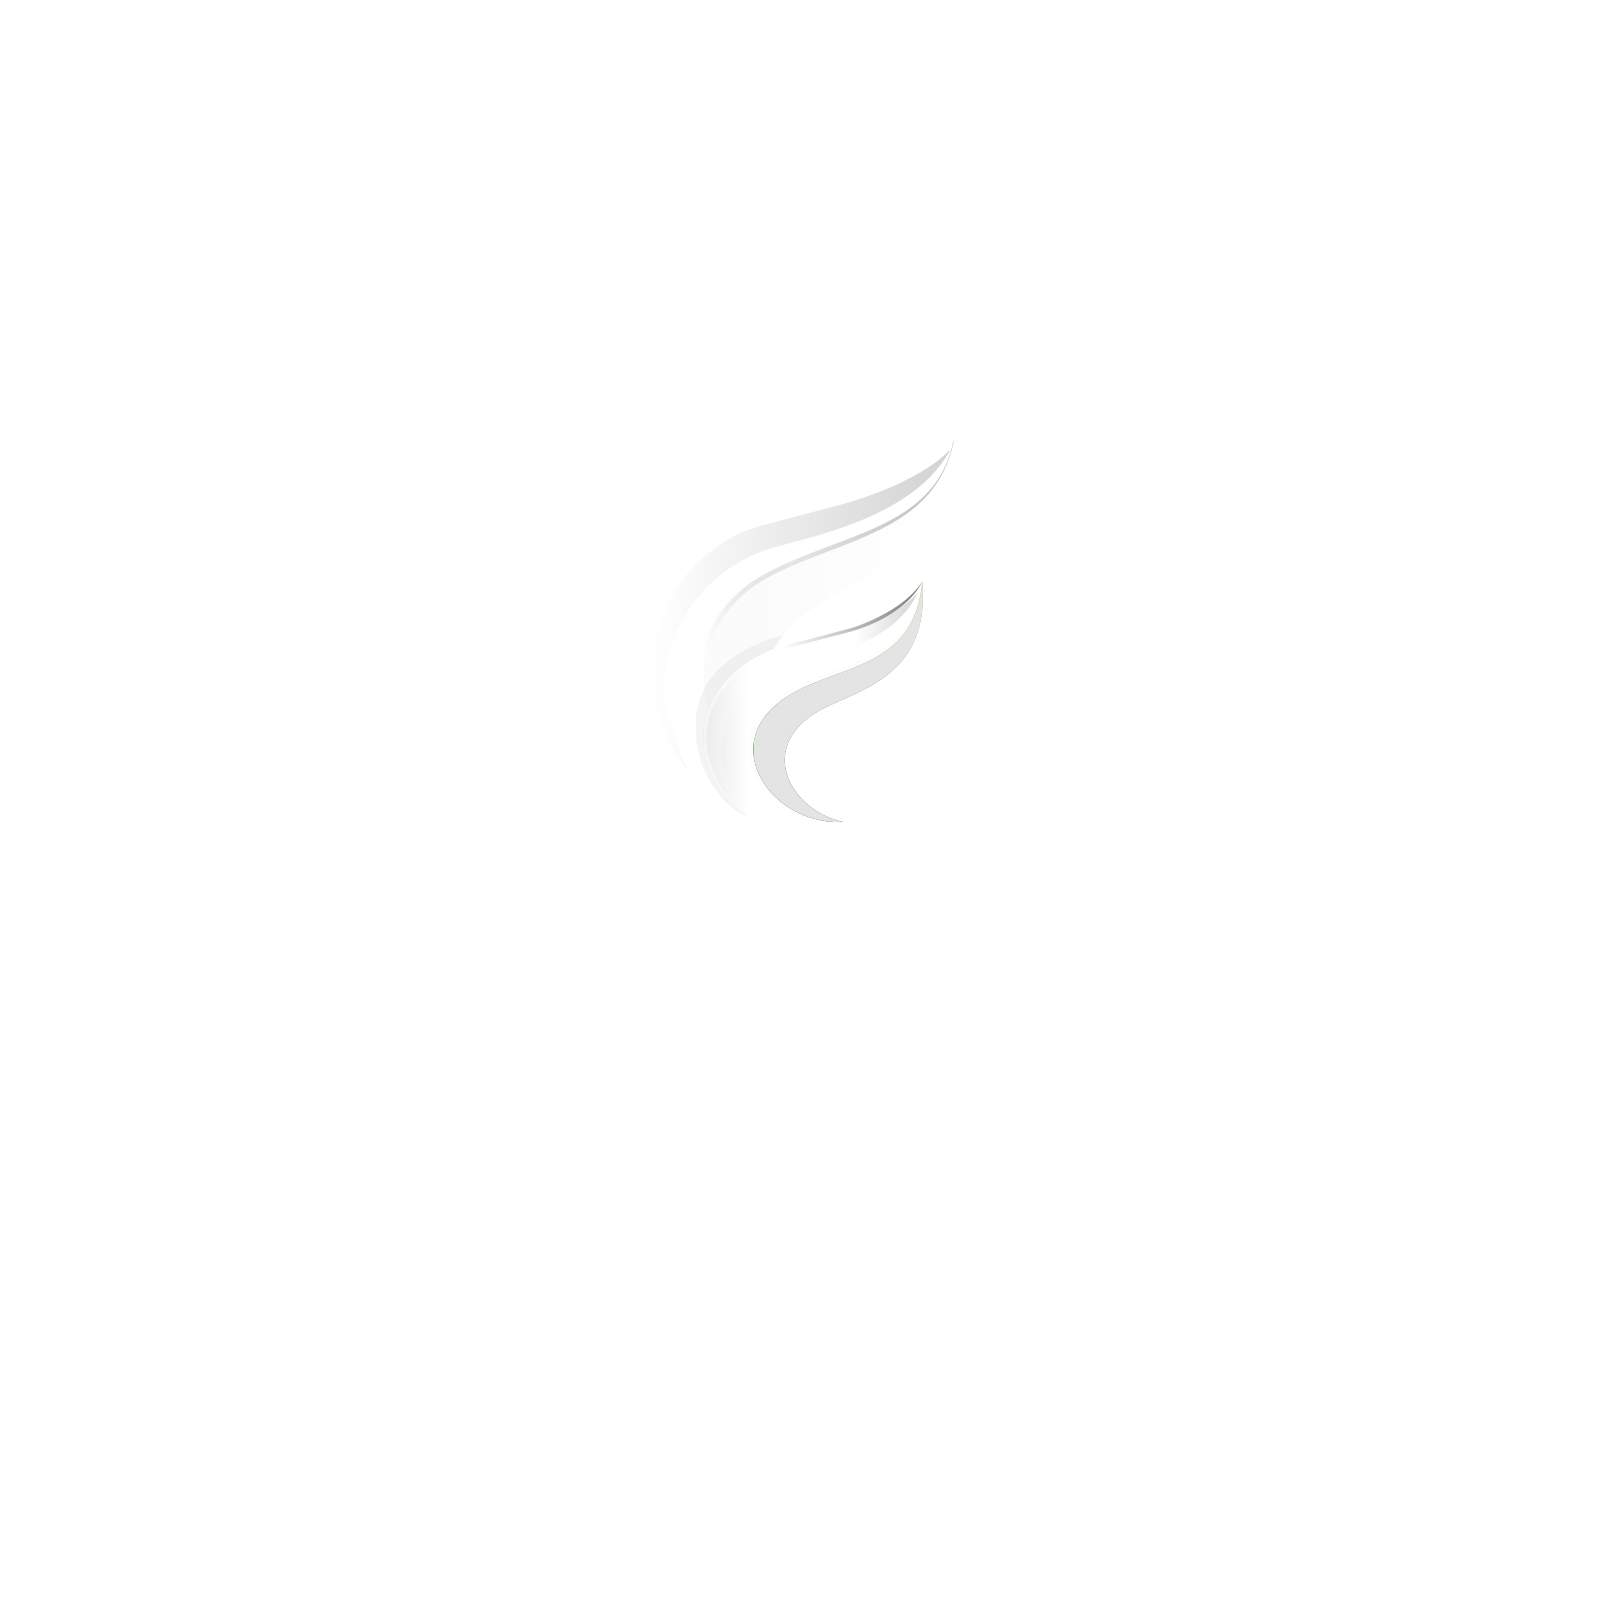 Our Pastor — Fountain Worship Center